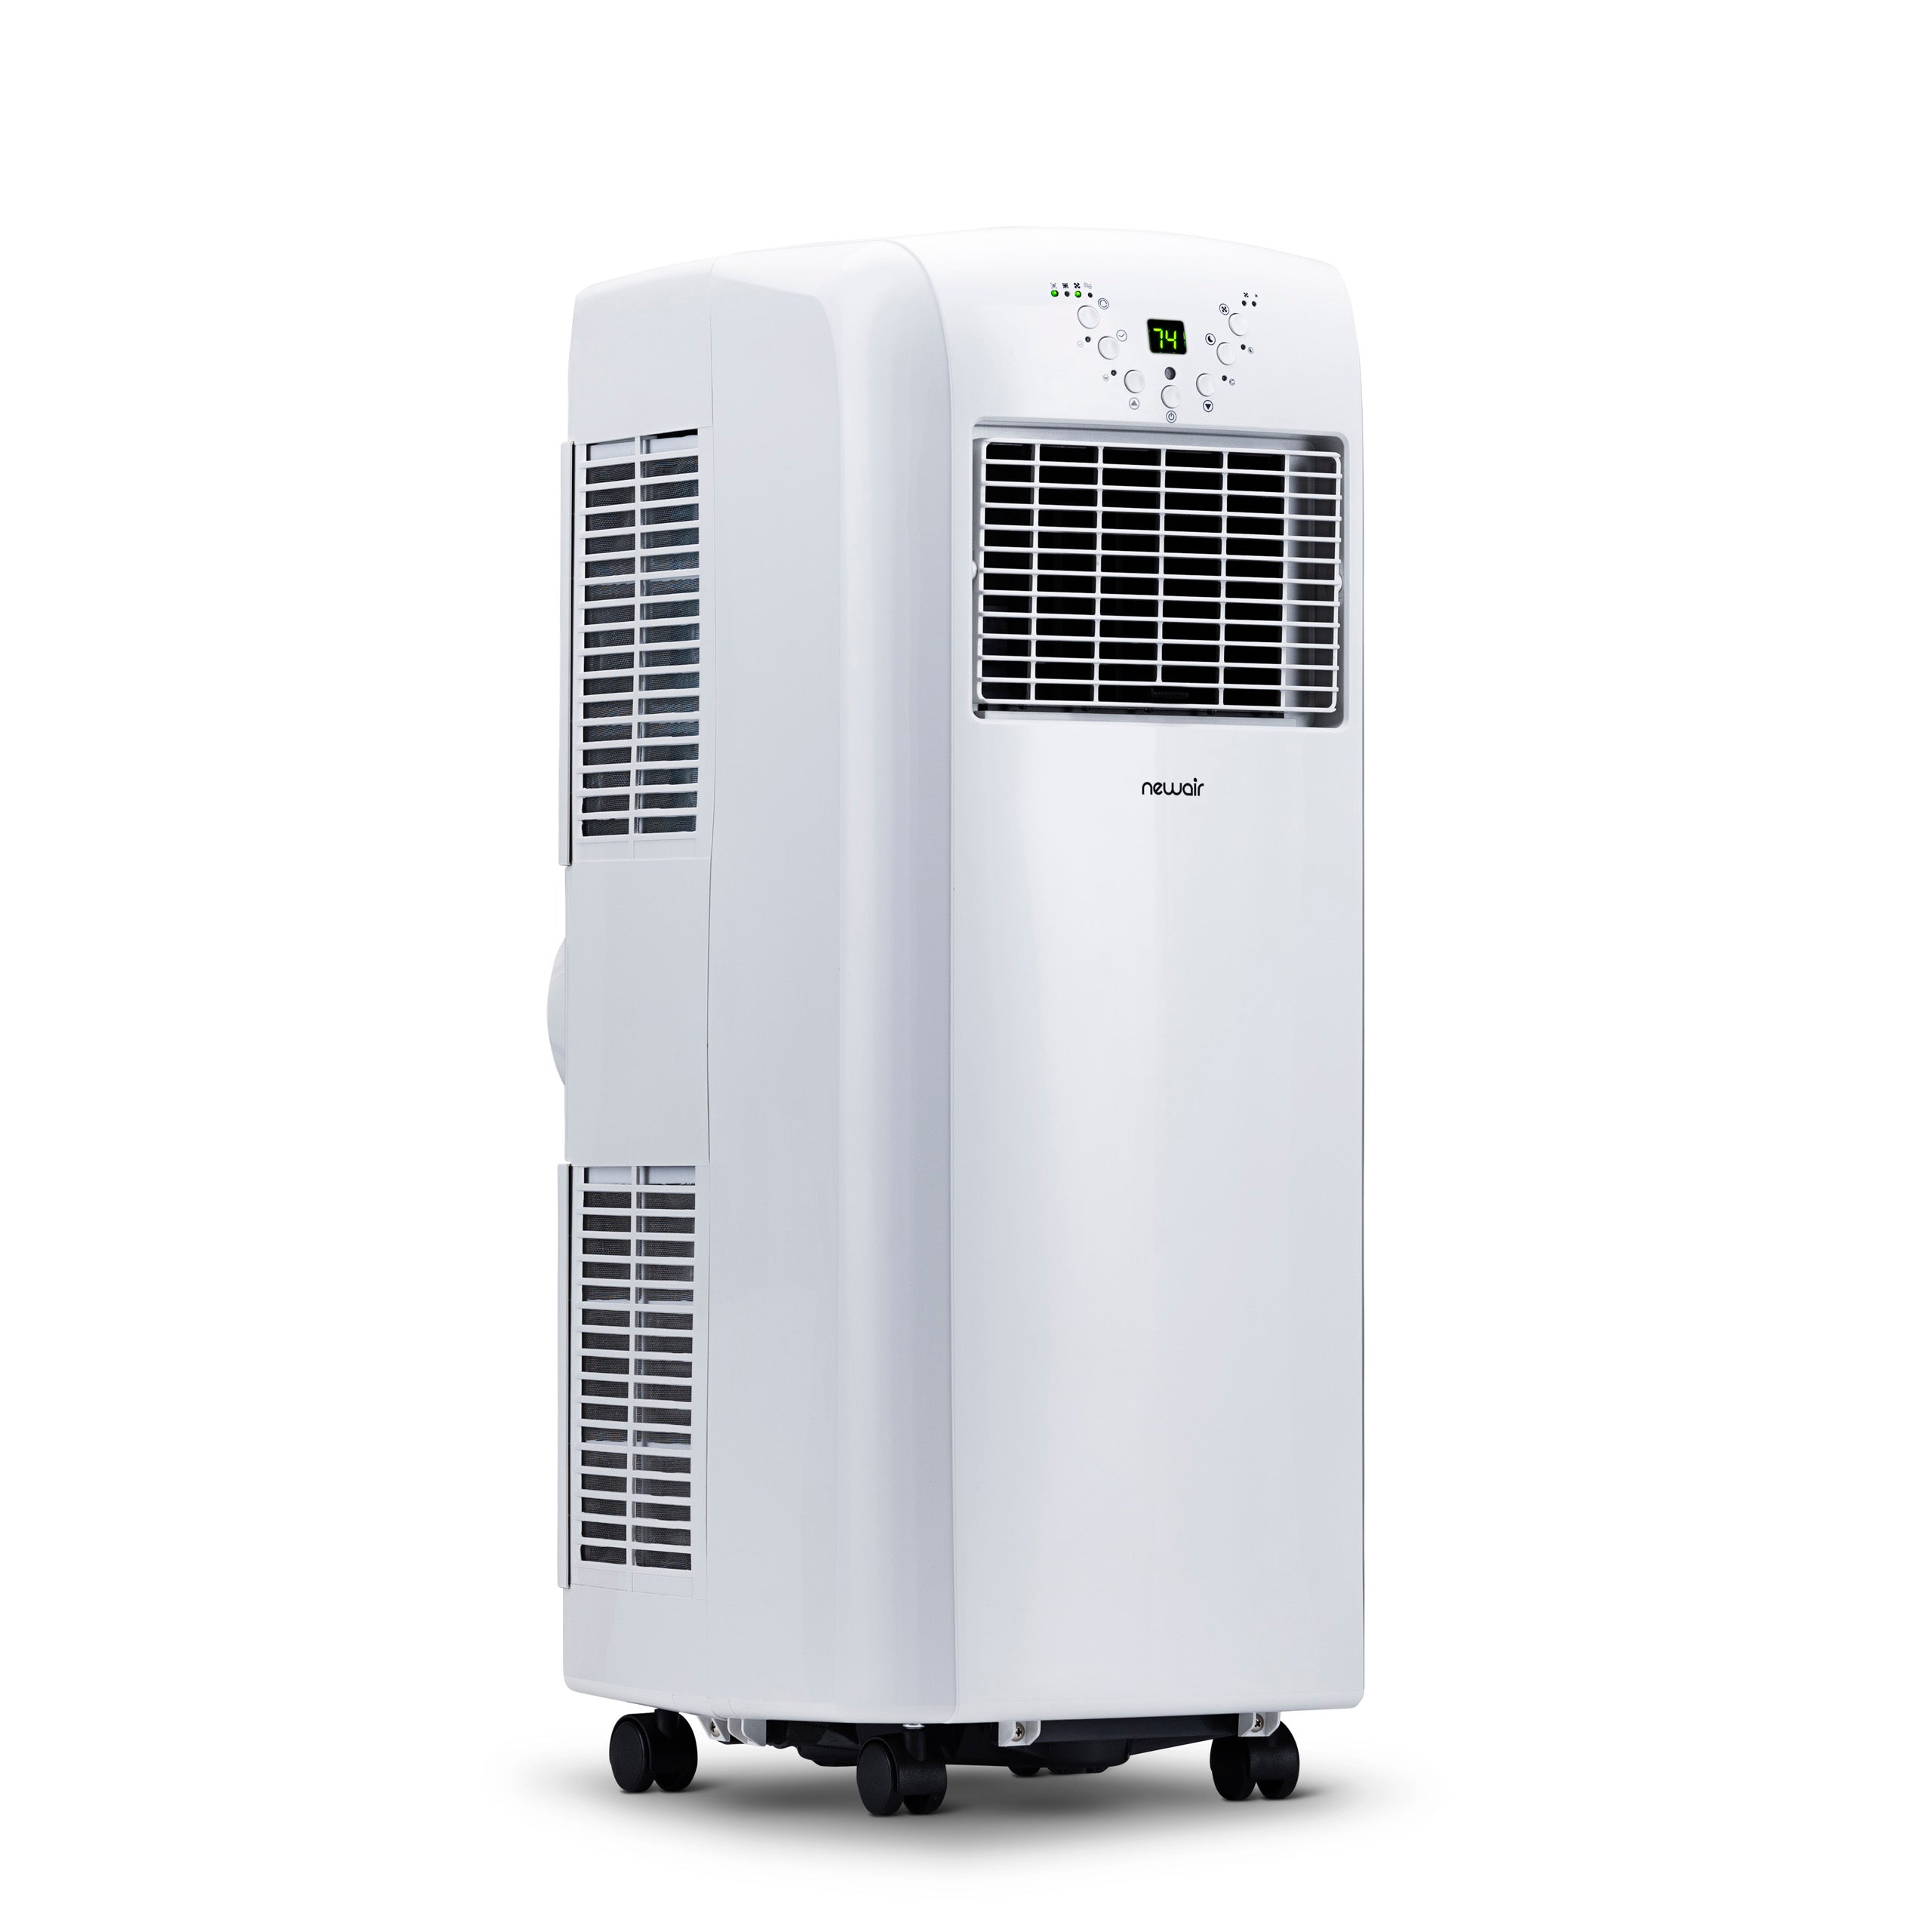 cooler type air conditioner